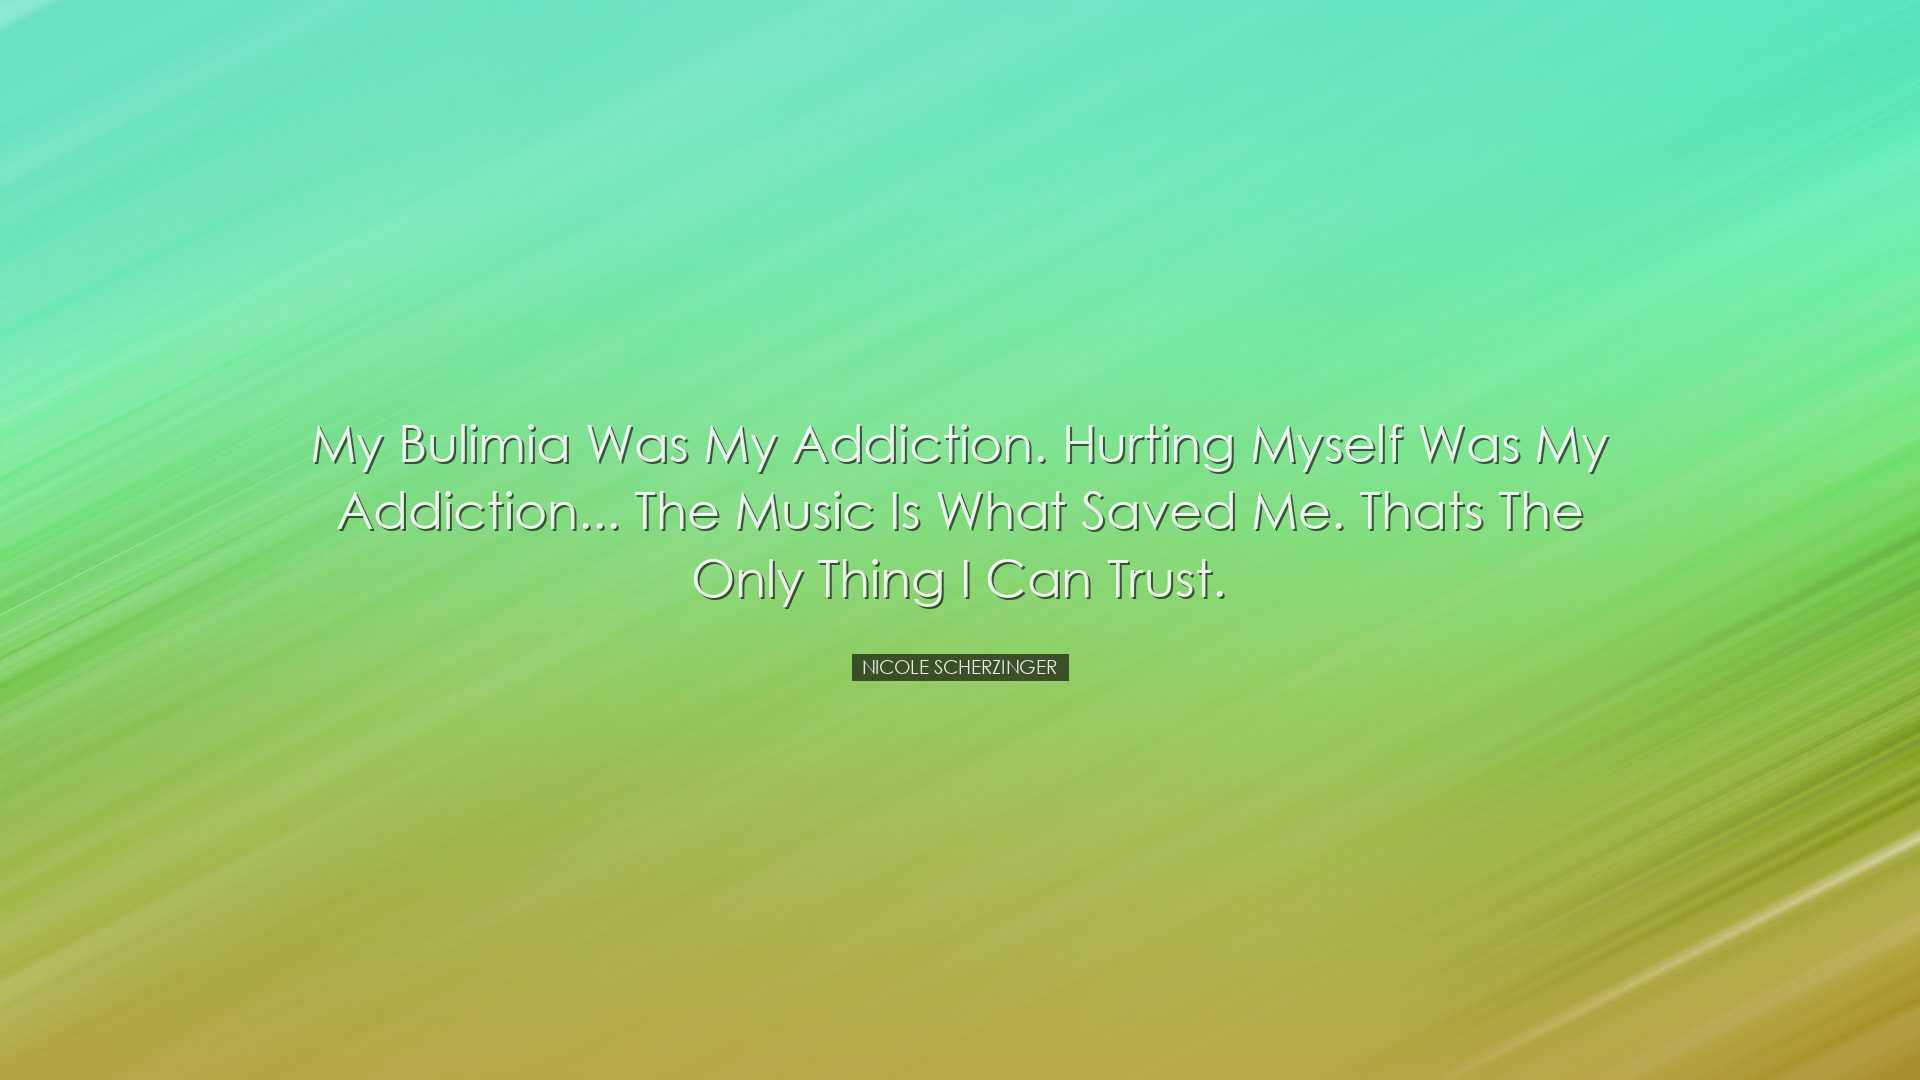 My bulimia was my addiction. Hurting myself was my addiction... Th